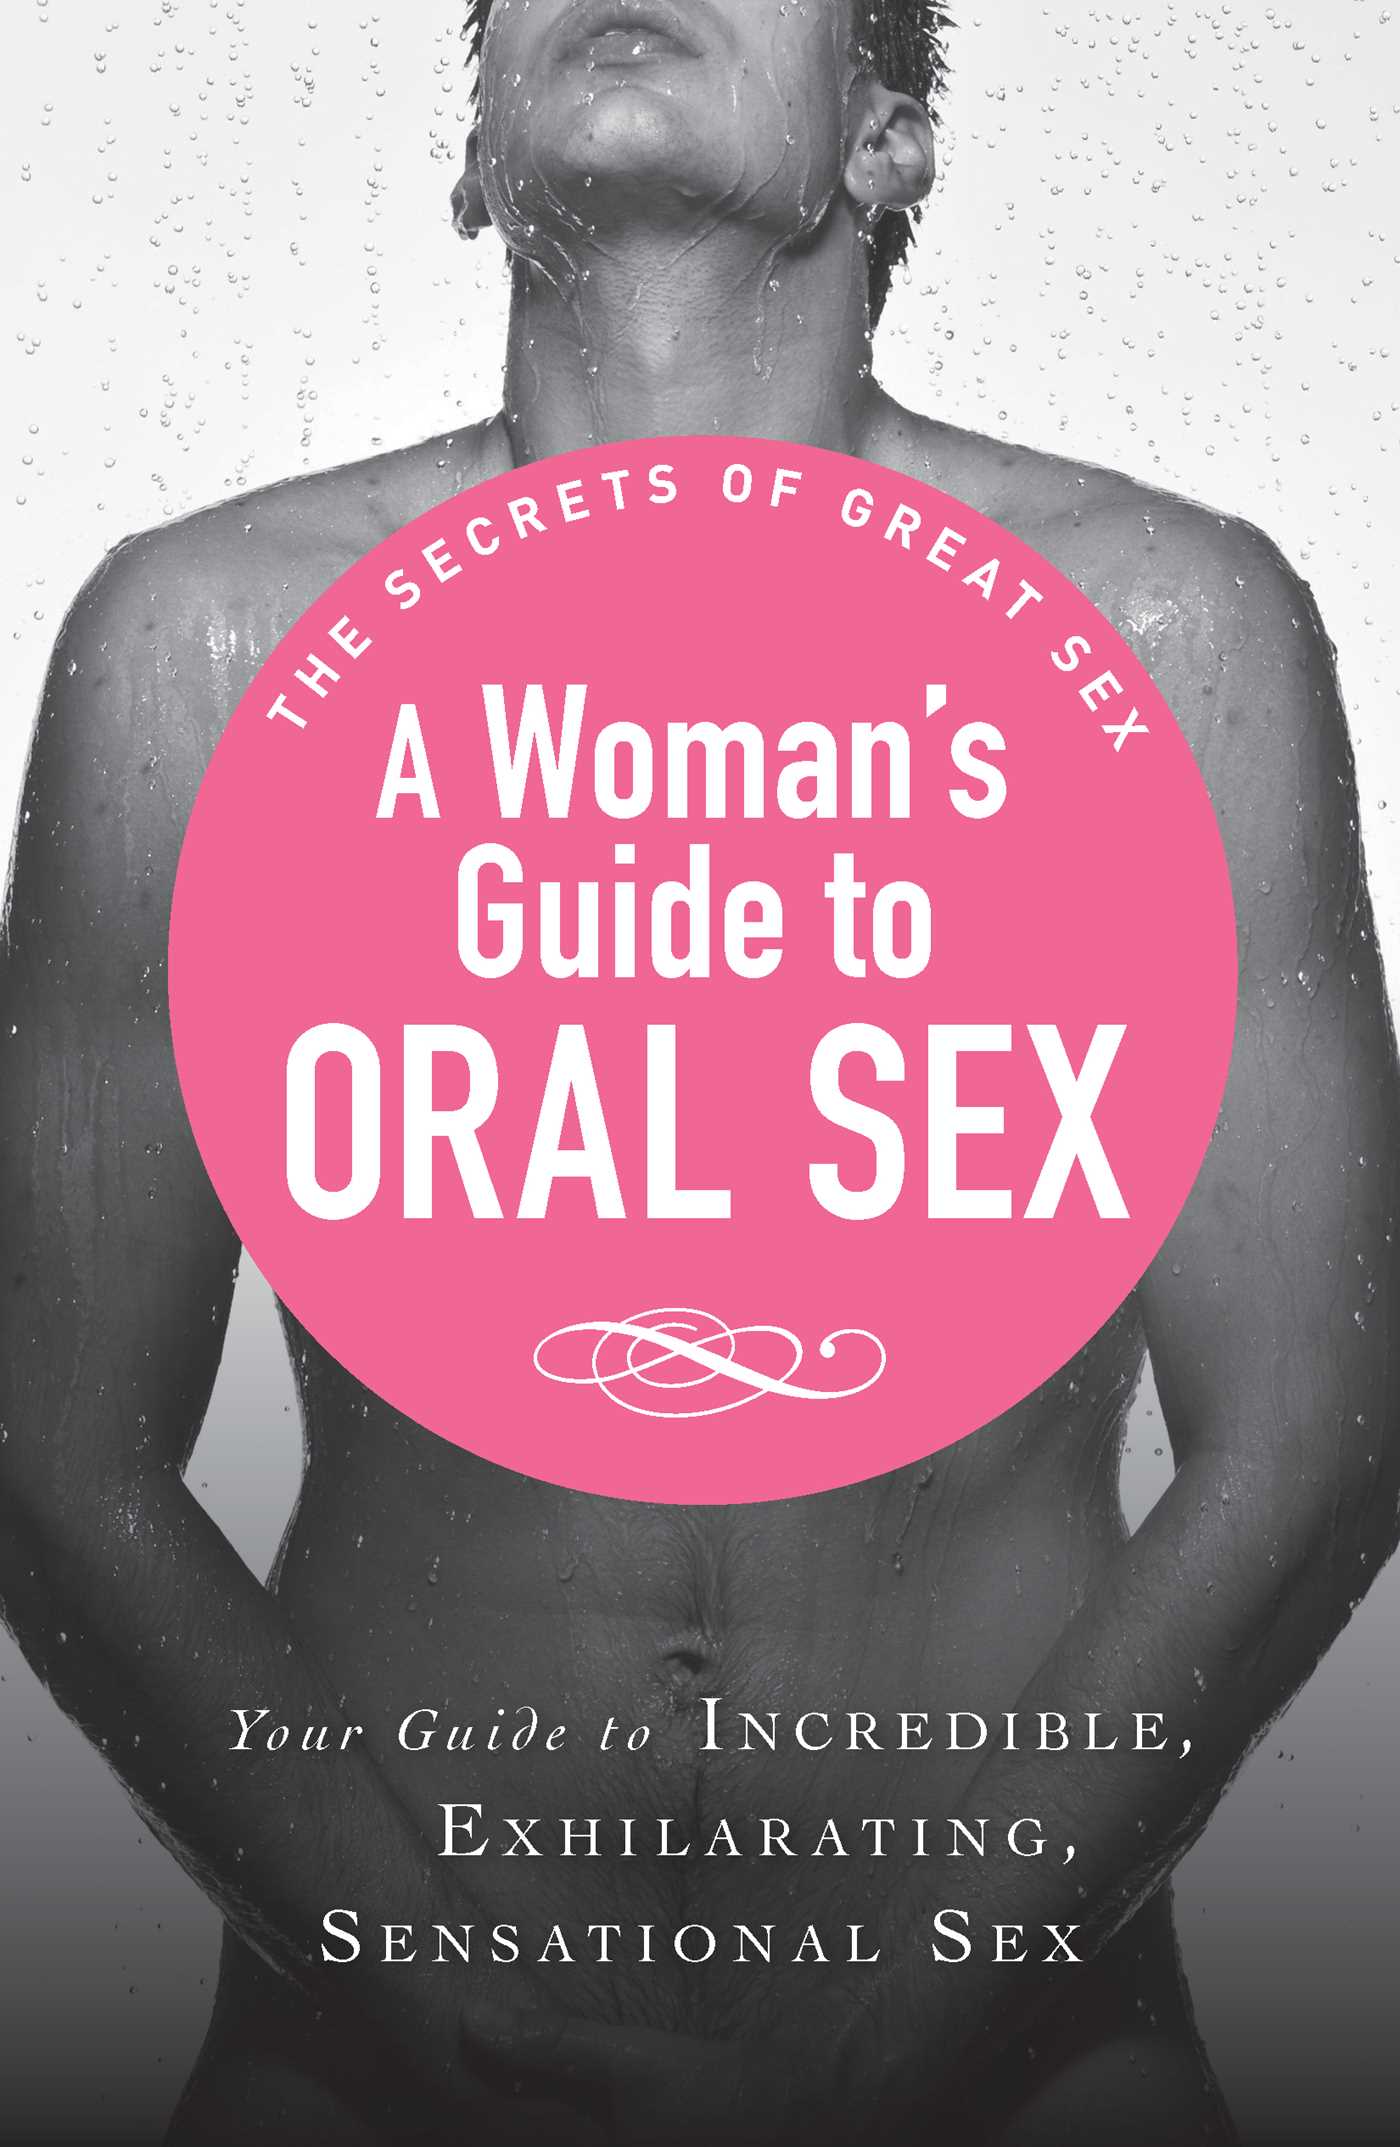 A Womans Guide to Oral Sex by Adams Media (ebook) image